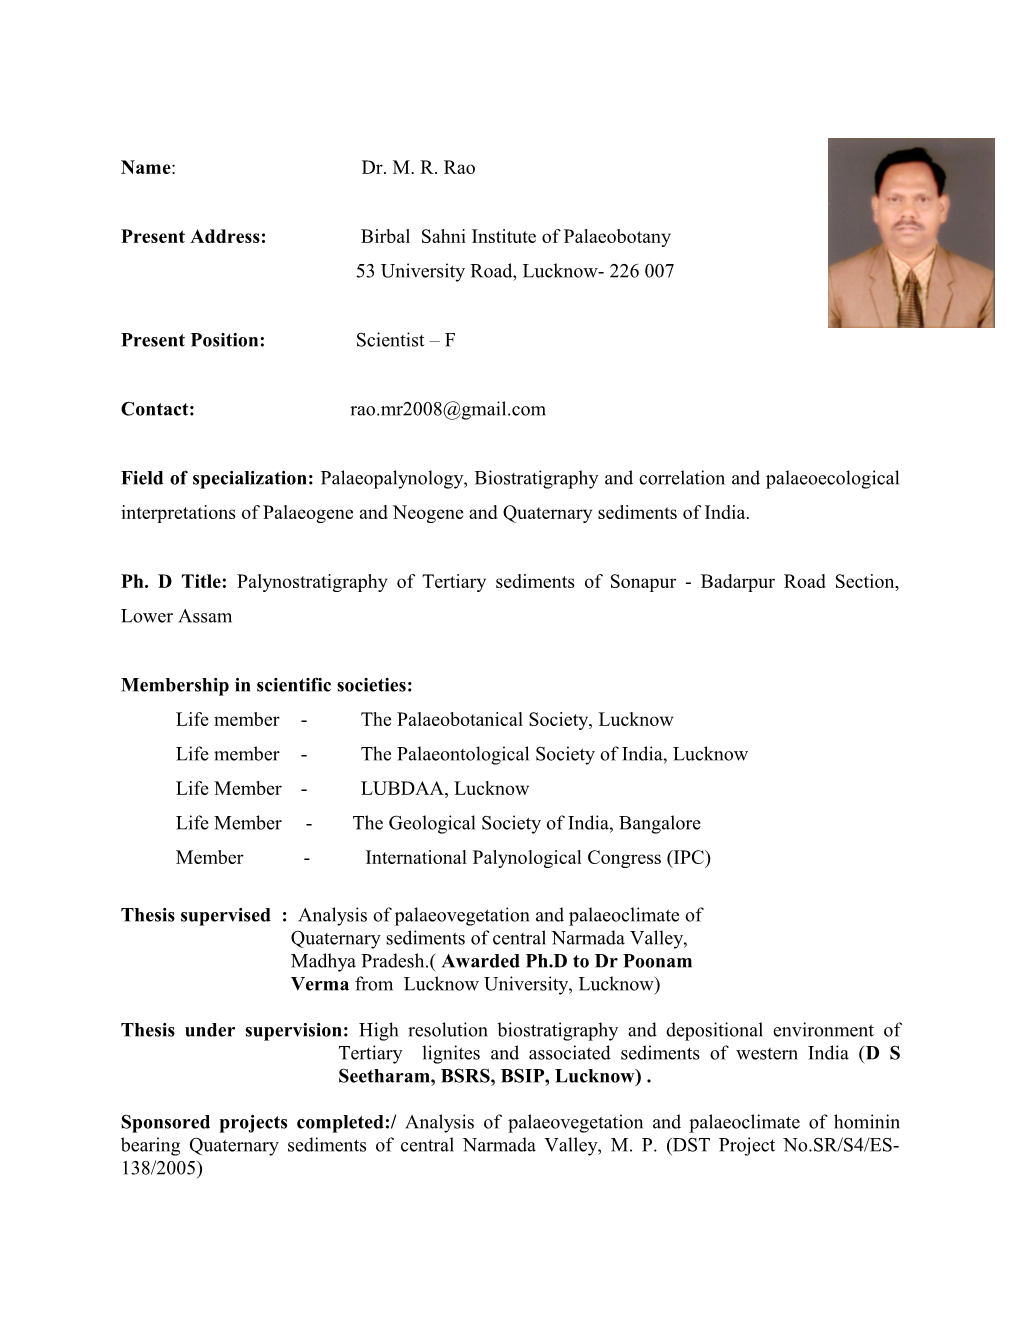 Present Address: Birbal Sahni Institute of Palaeobotany